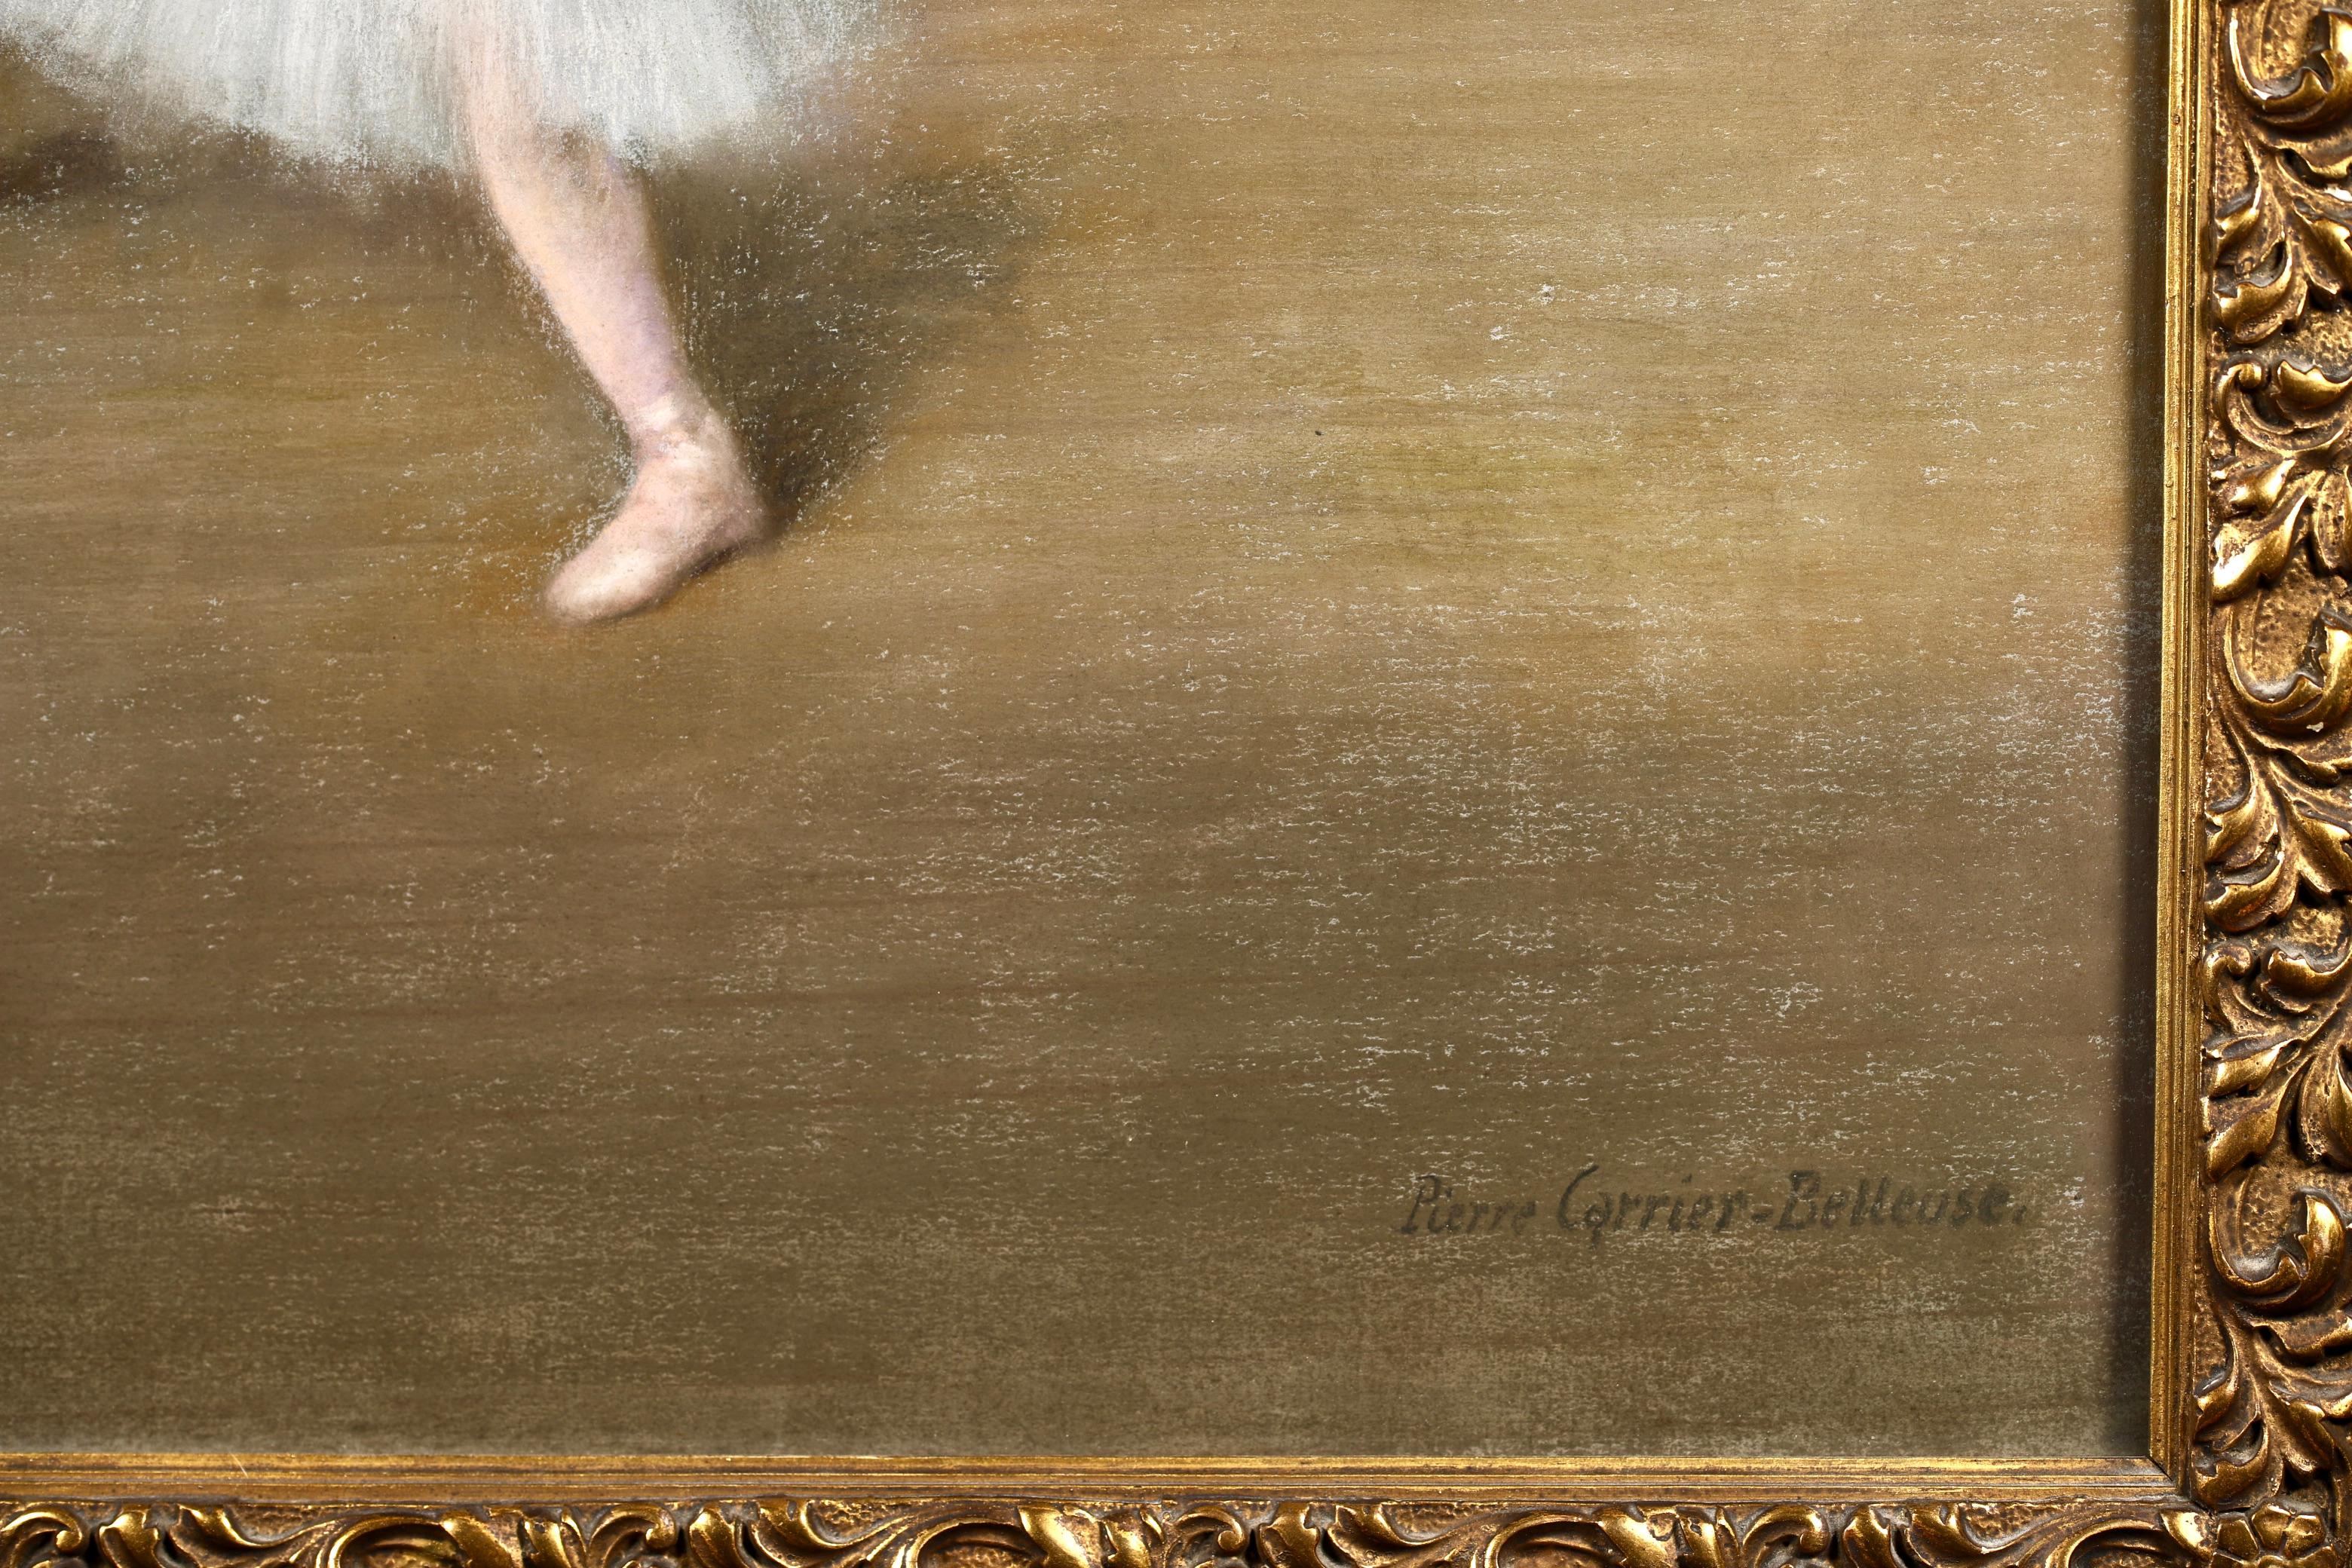 Danseuses a la barre – Impressionistisches figuratives Pastell – Pierre Carrier-Belleuse, Danseuses im Angebot 8